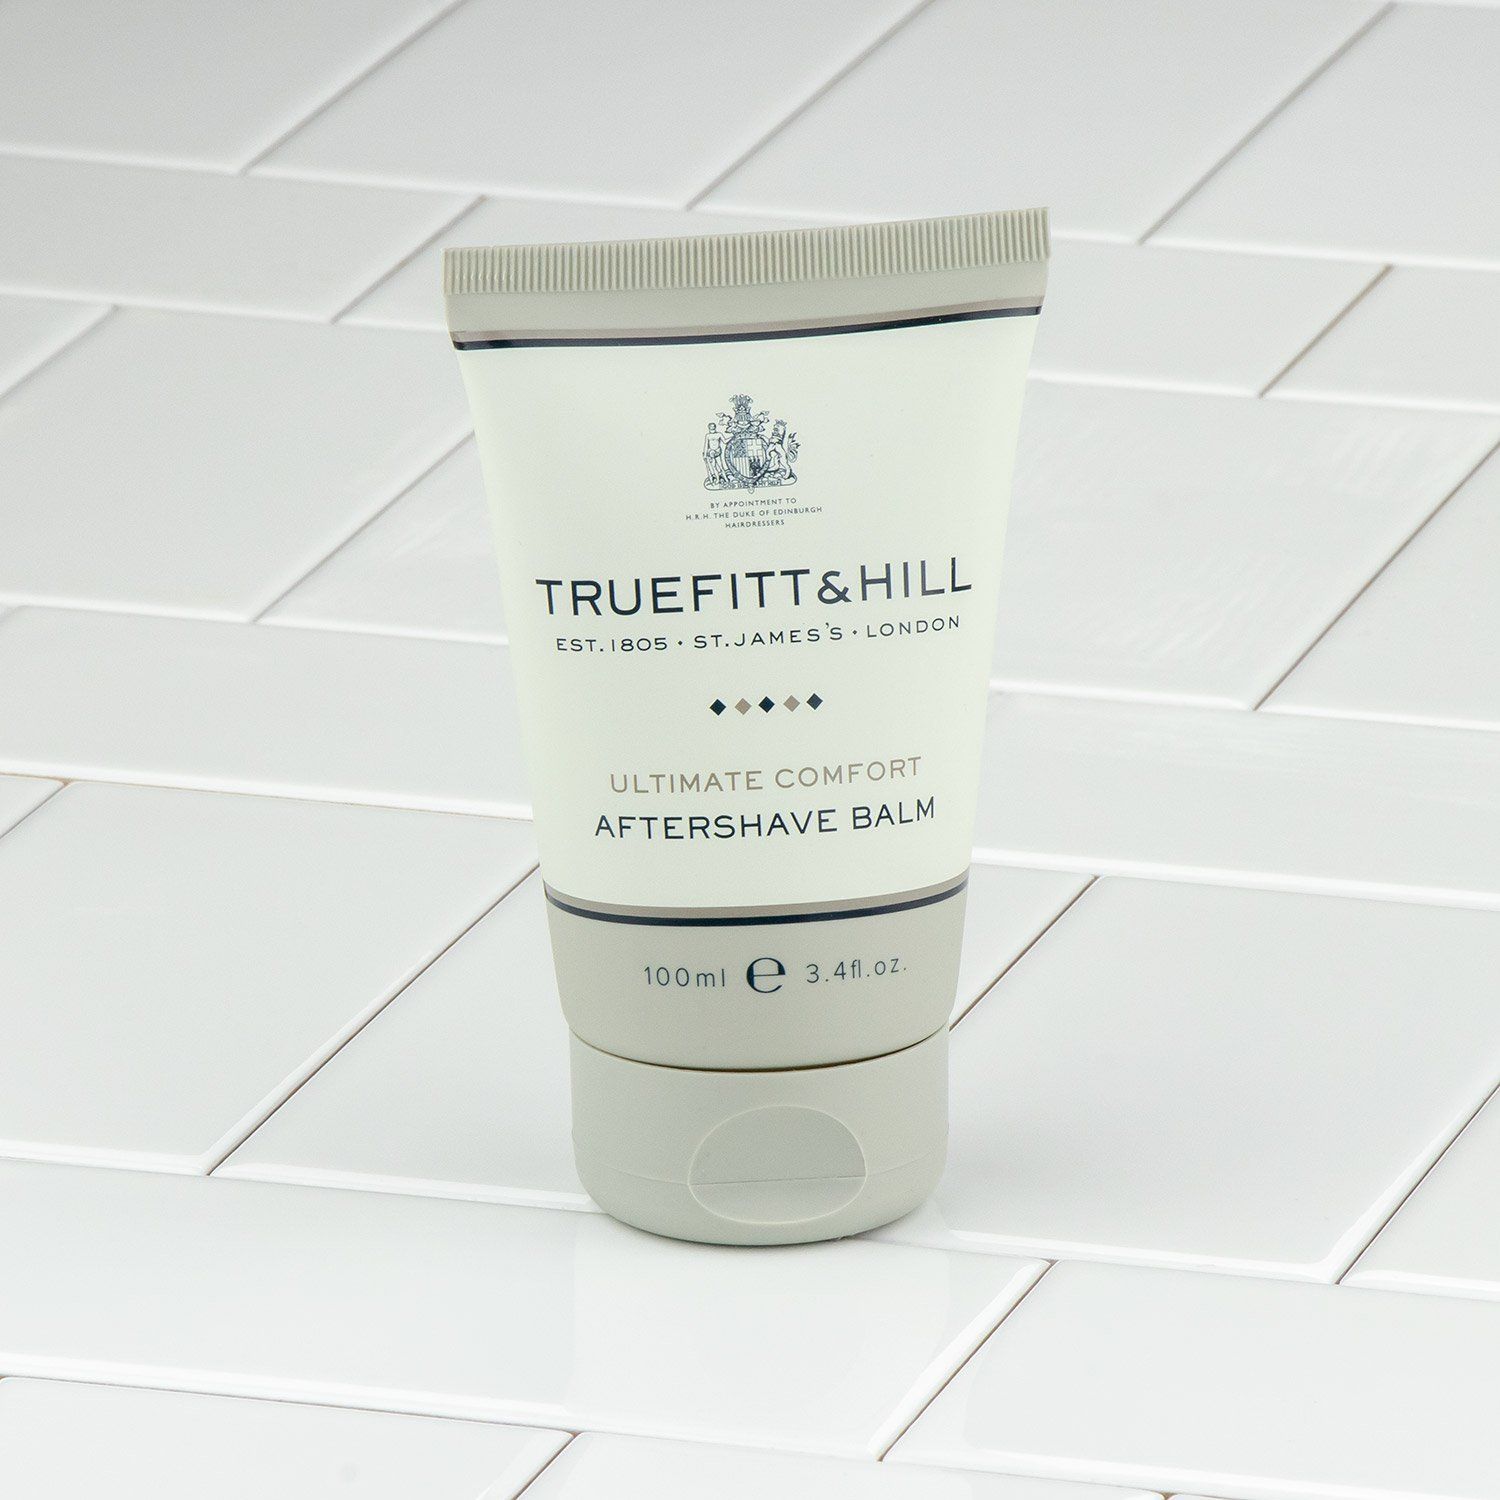 Truefitt & Hill Ultimate Comfort Aftershave Balm